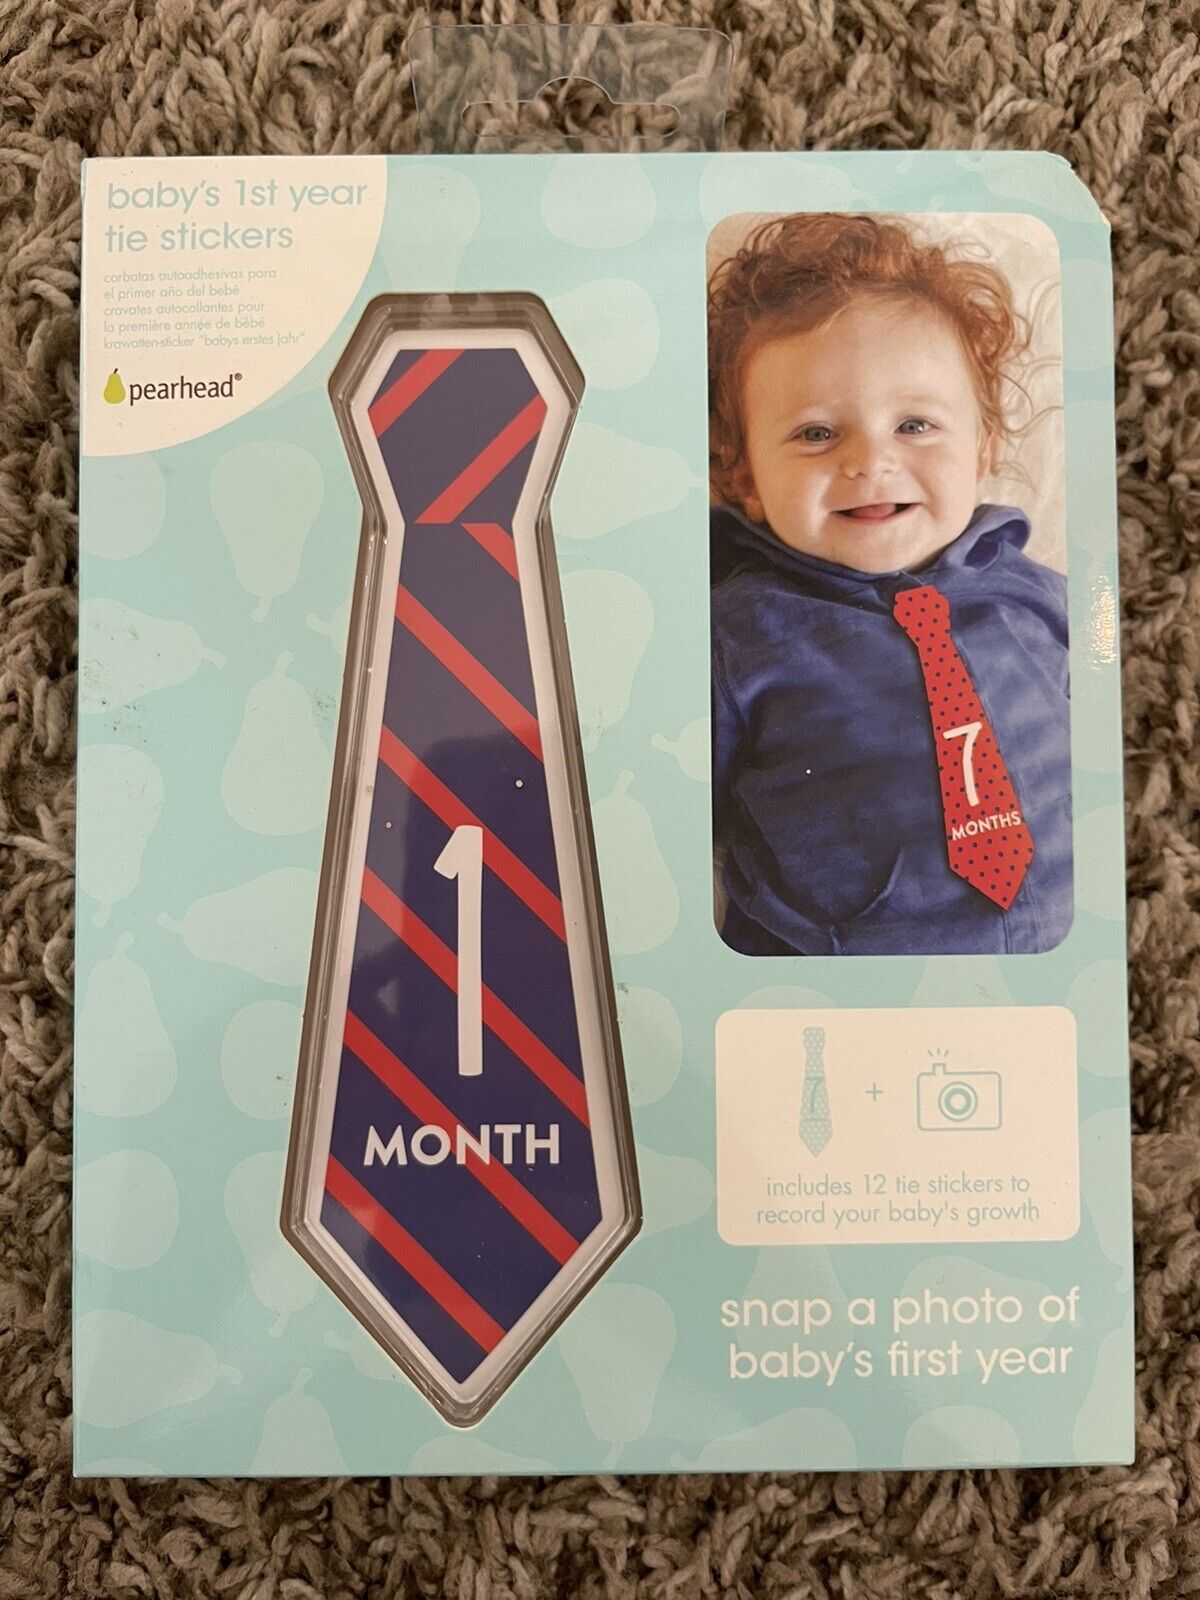 Pearhead Baby's First Year Tie Stickers- 1 Pack 12 Ties Photo Op